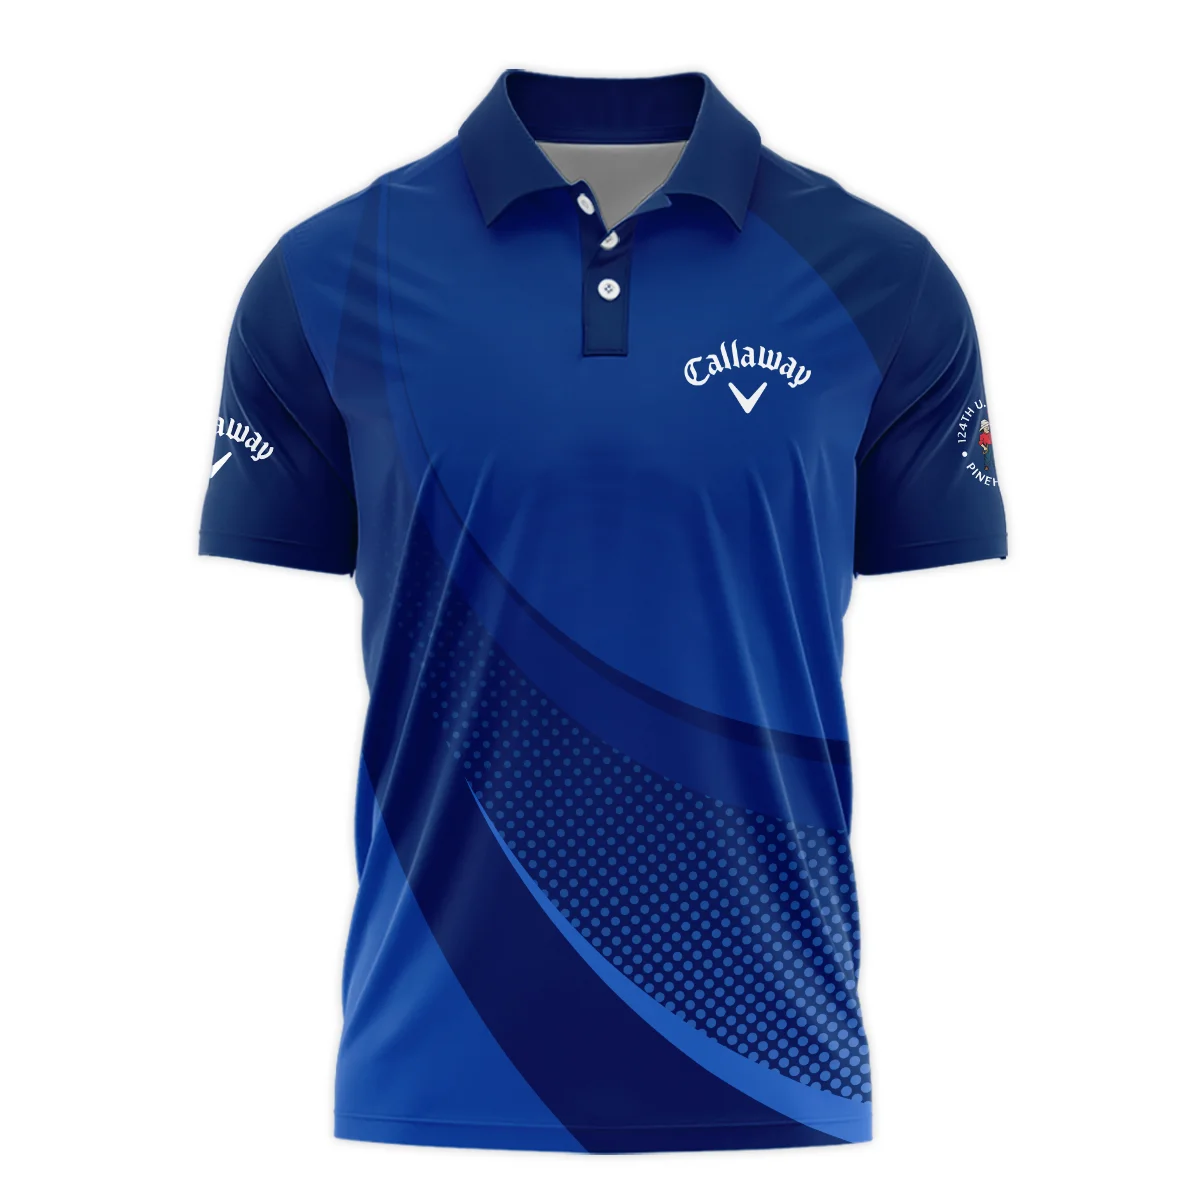 Callaway 124th U.S. Open Pinehurst Golf Sport Bomber Jacket Dark Blue Gradient Halftone Pattern All Over Print Bomber Jacket